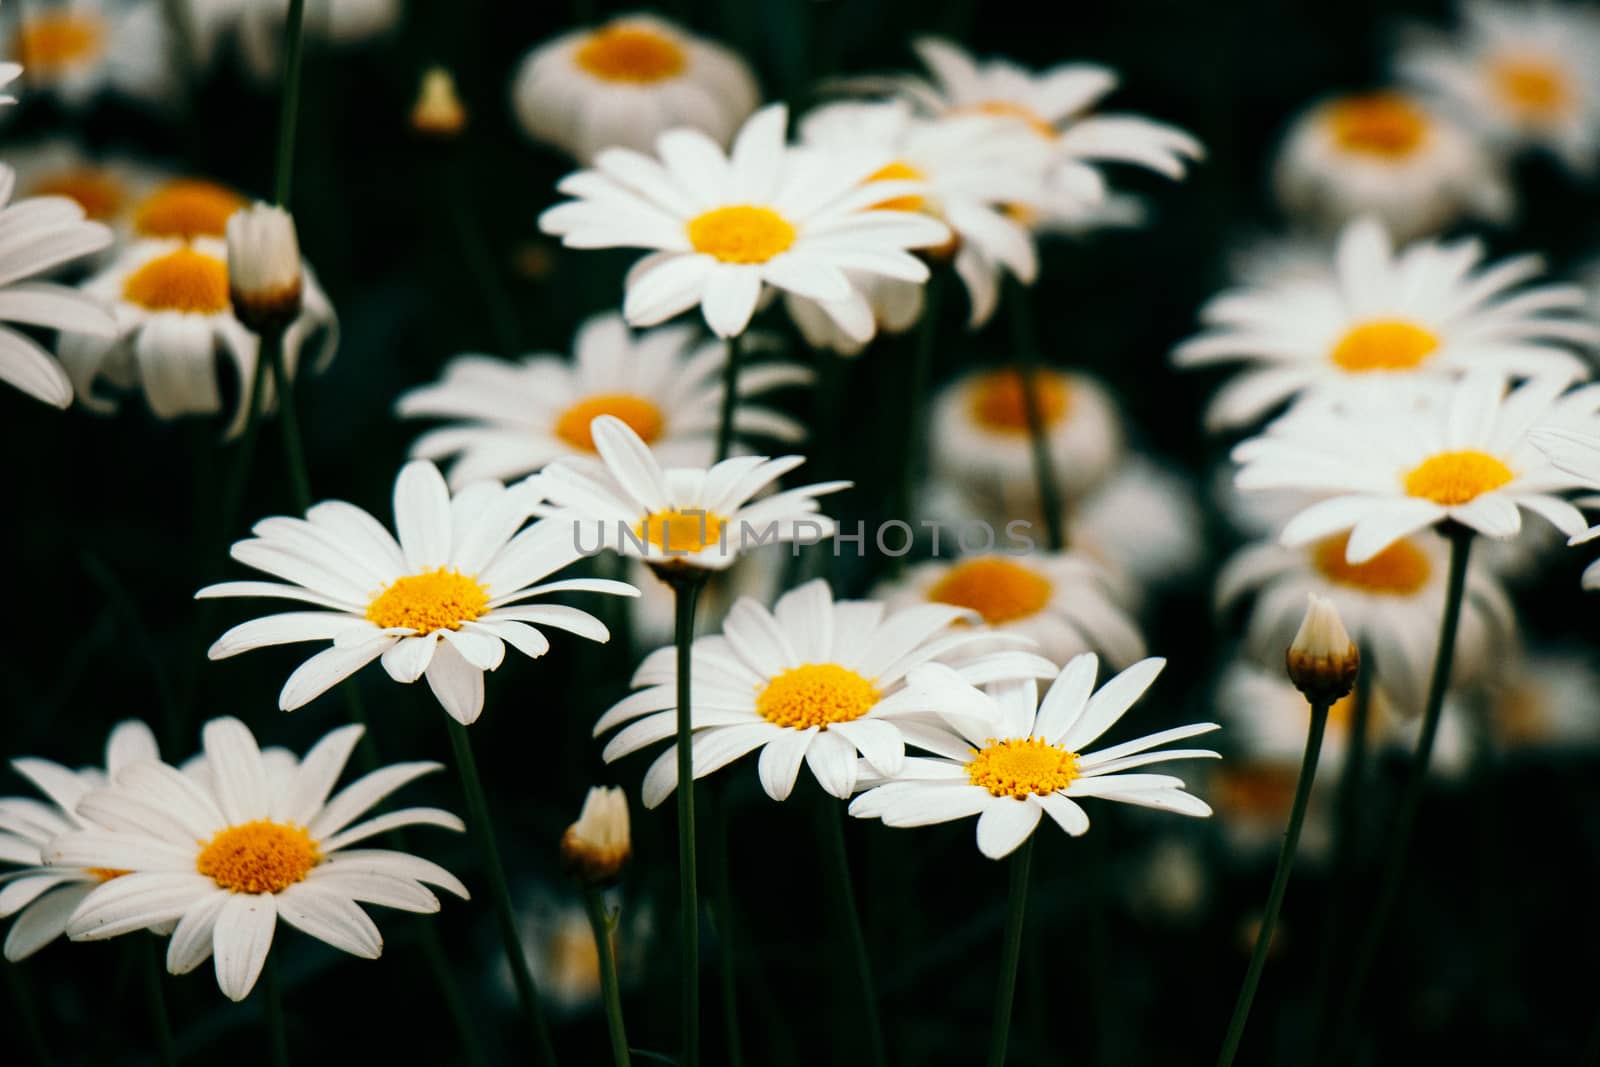 Spring flowers background with vintage filter